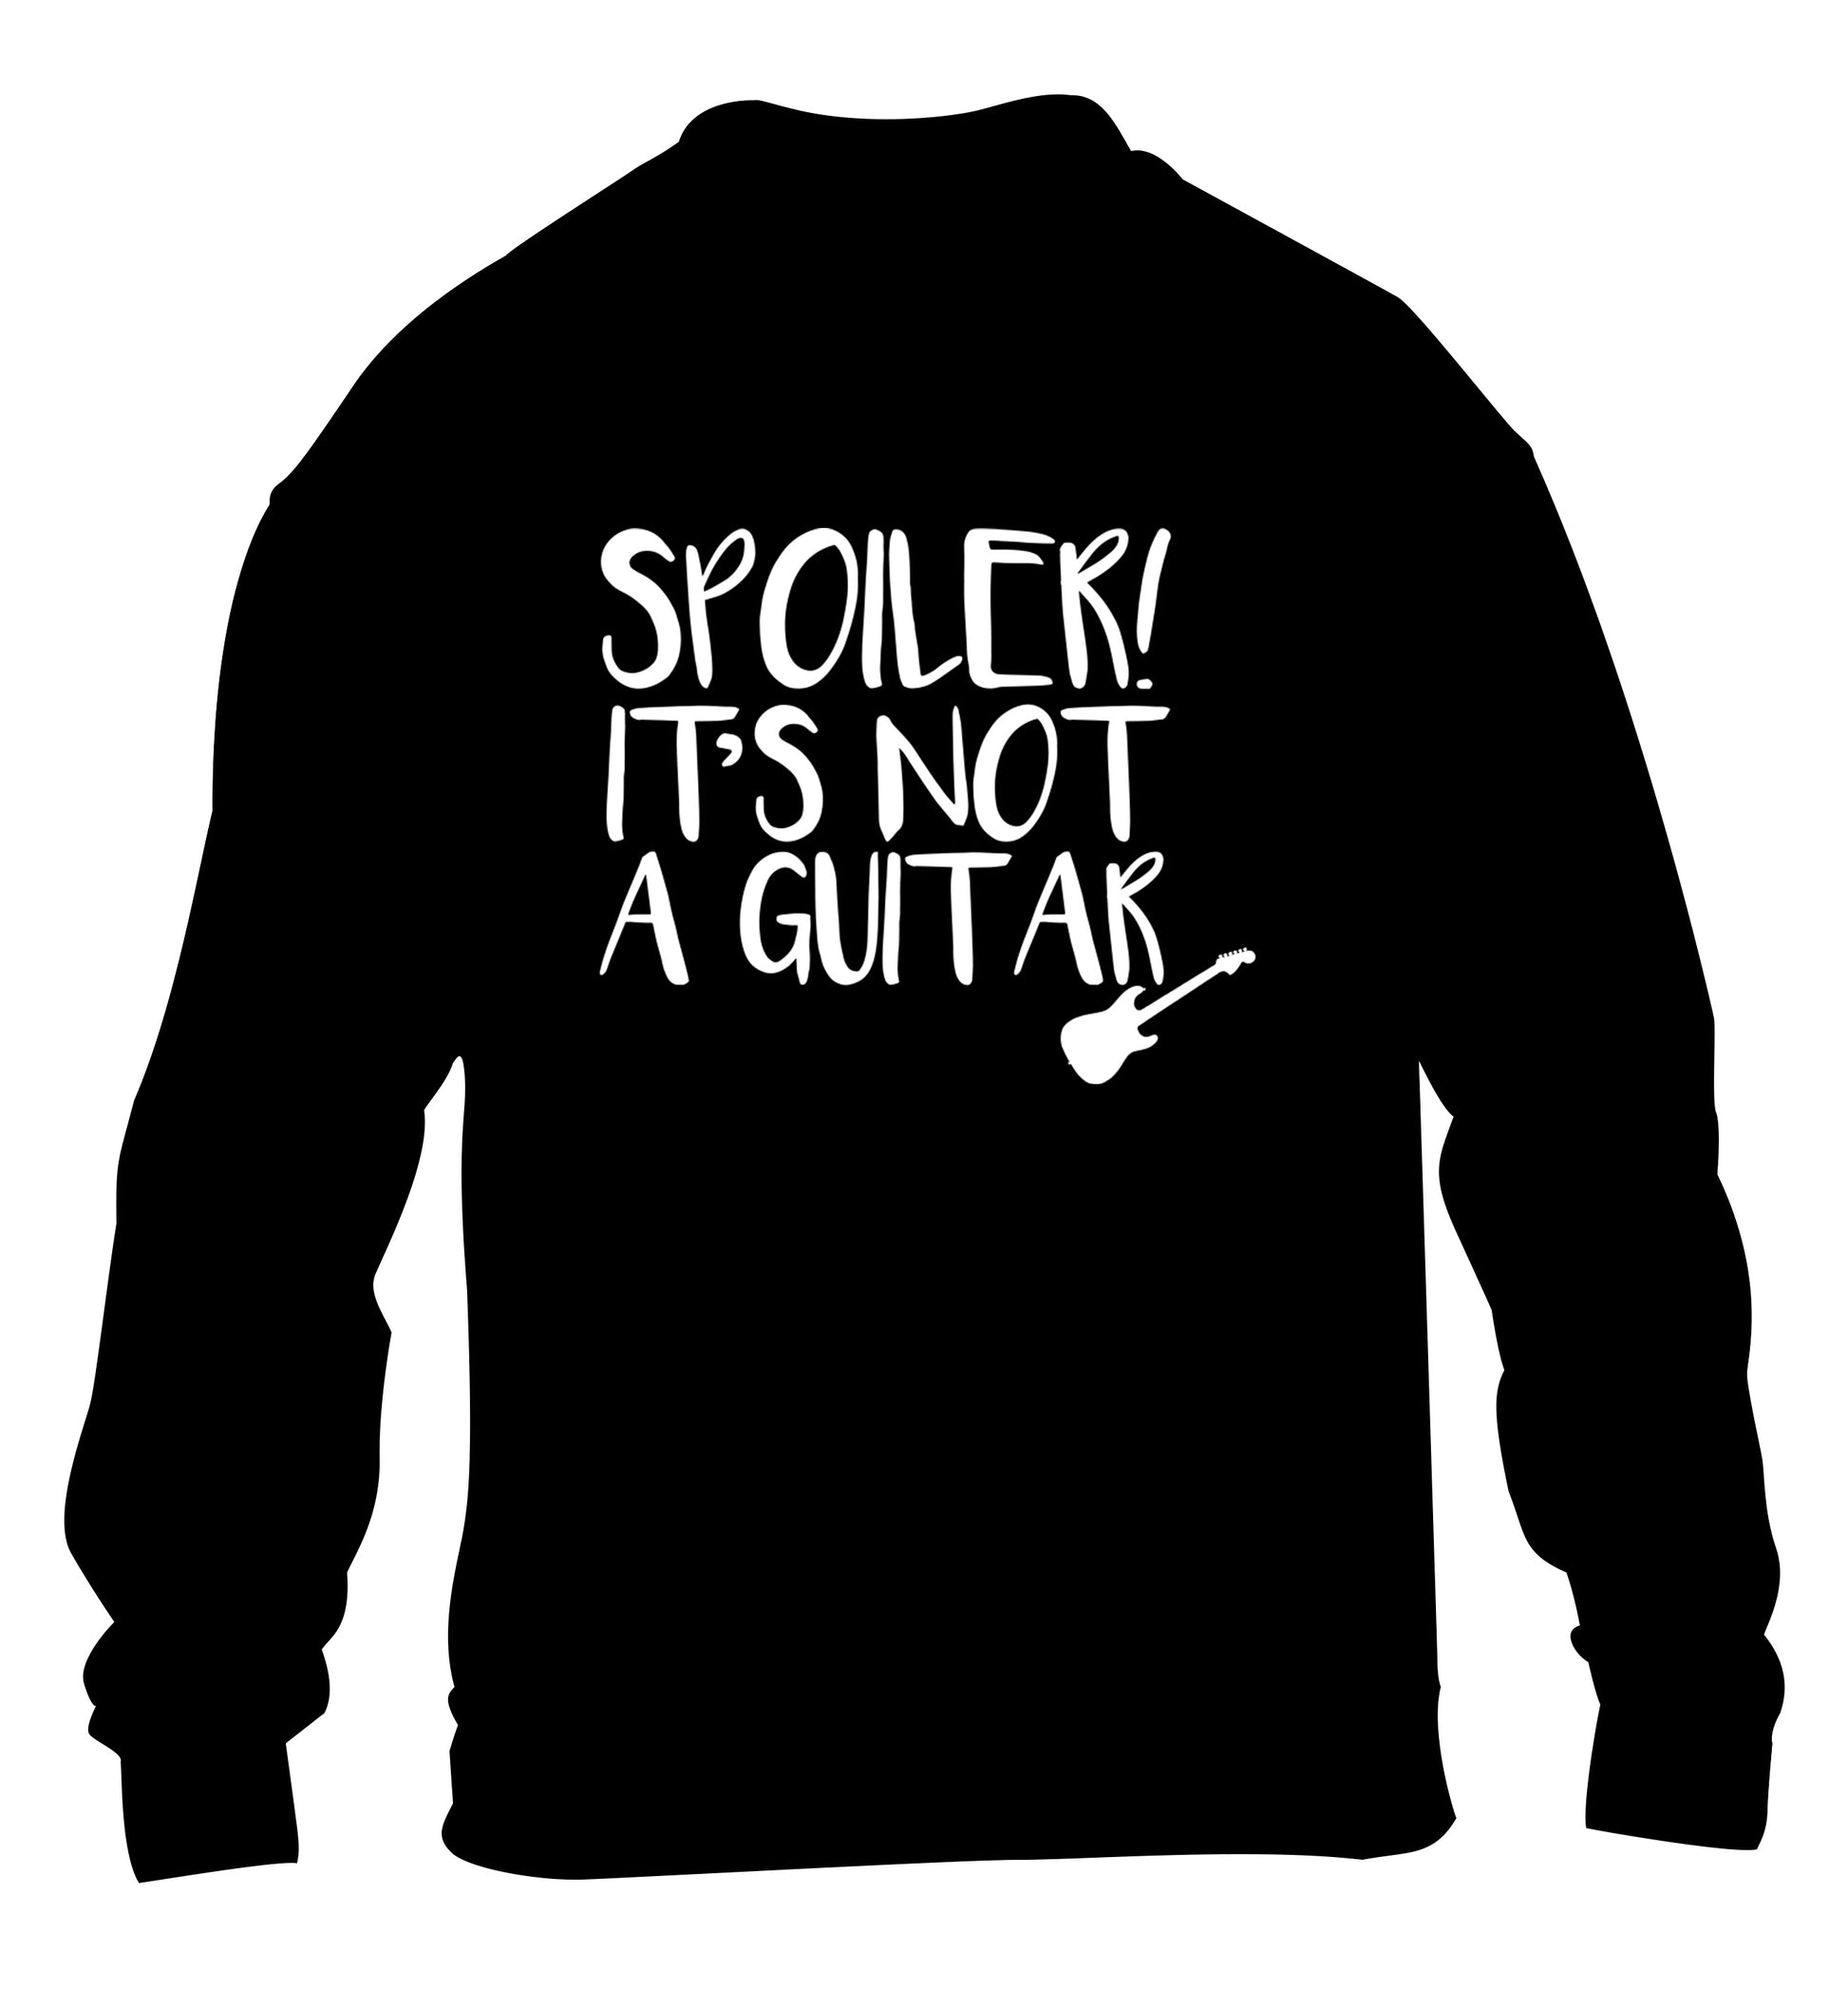 Spoiler it's not a guitar children's black sweater 12-13 Years